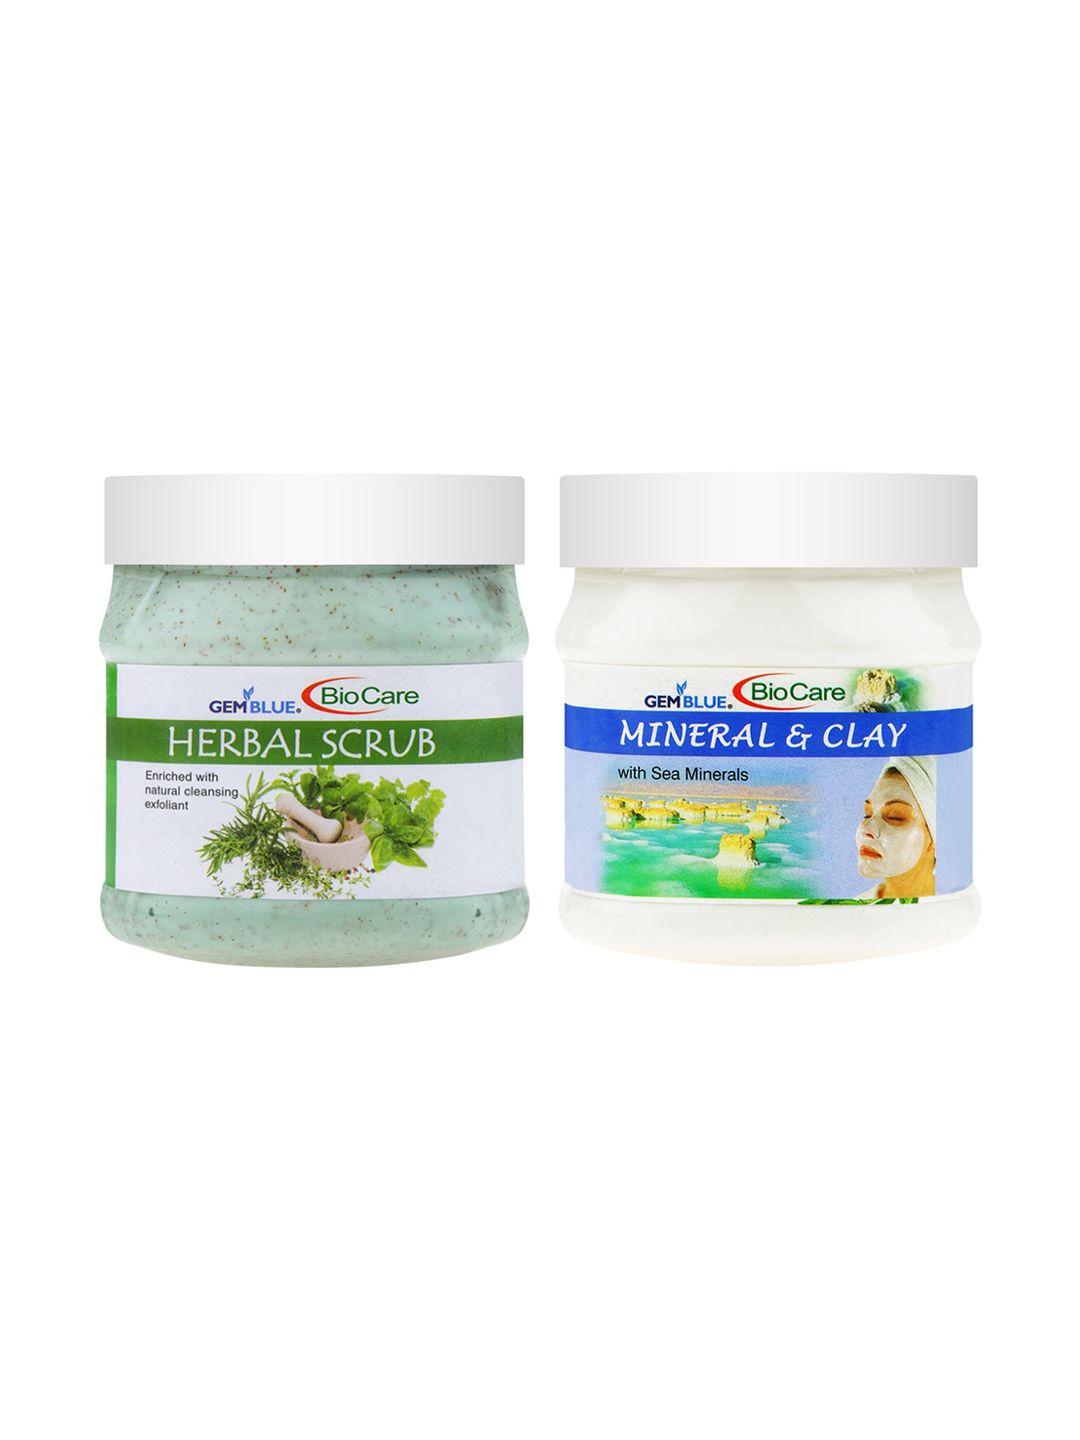 gemblue biocare unisex herbal scrub with gemblue mineral & clay mask 500ml each